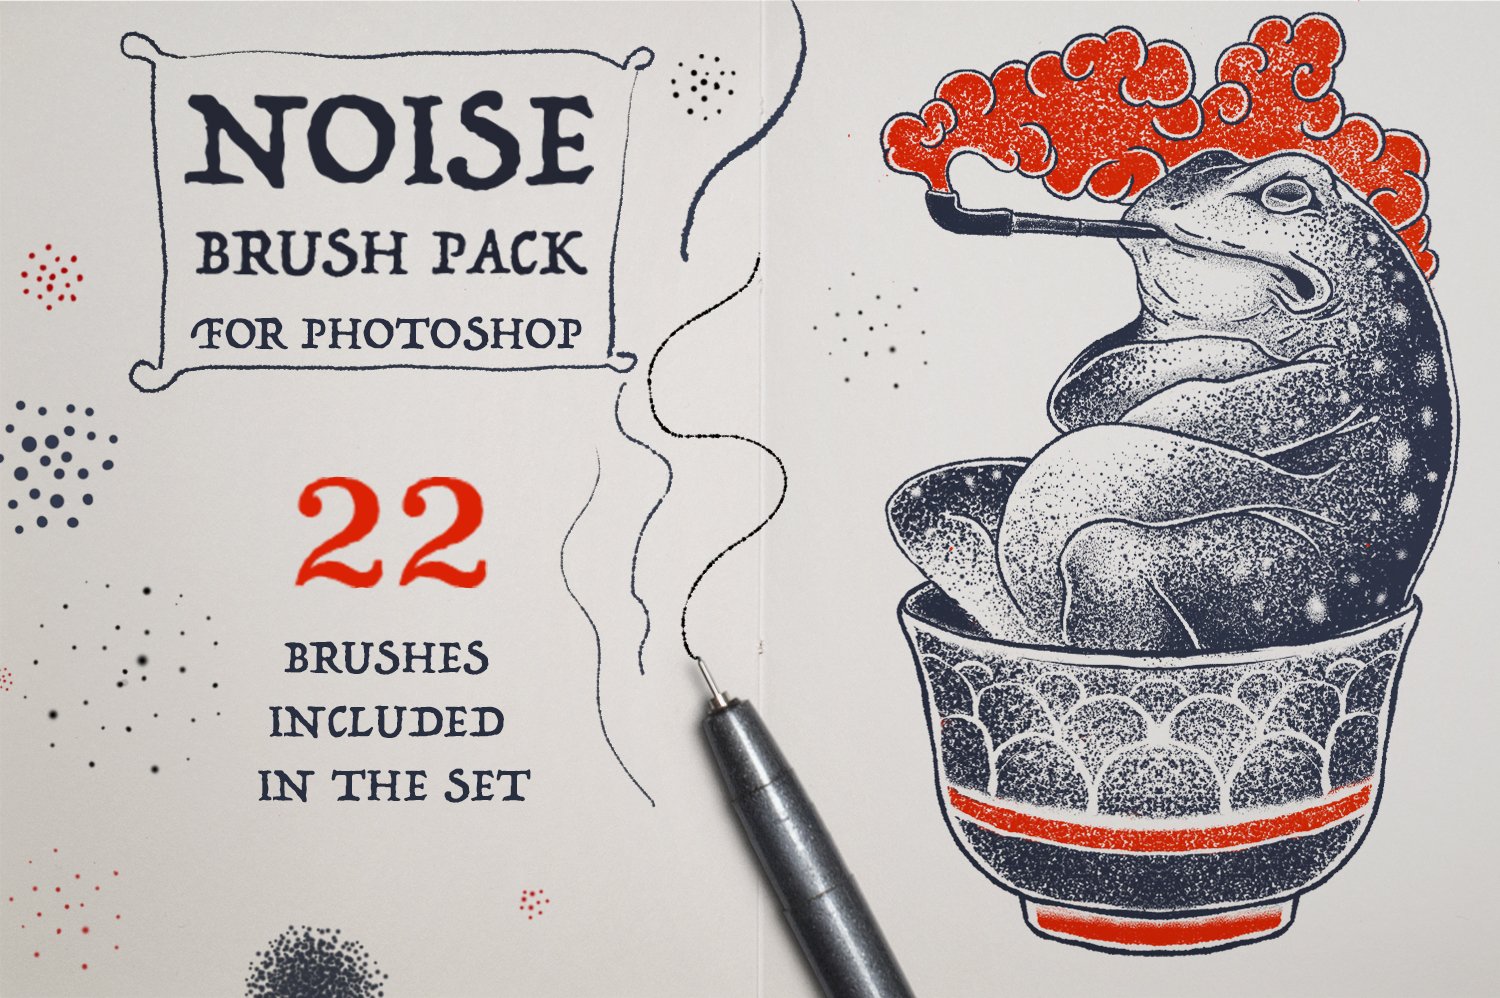 Noise Brush Packcover image.